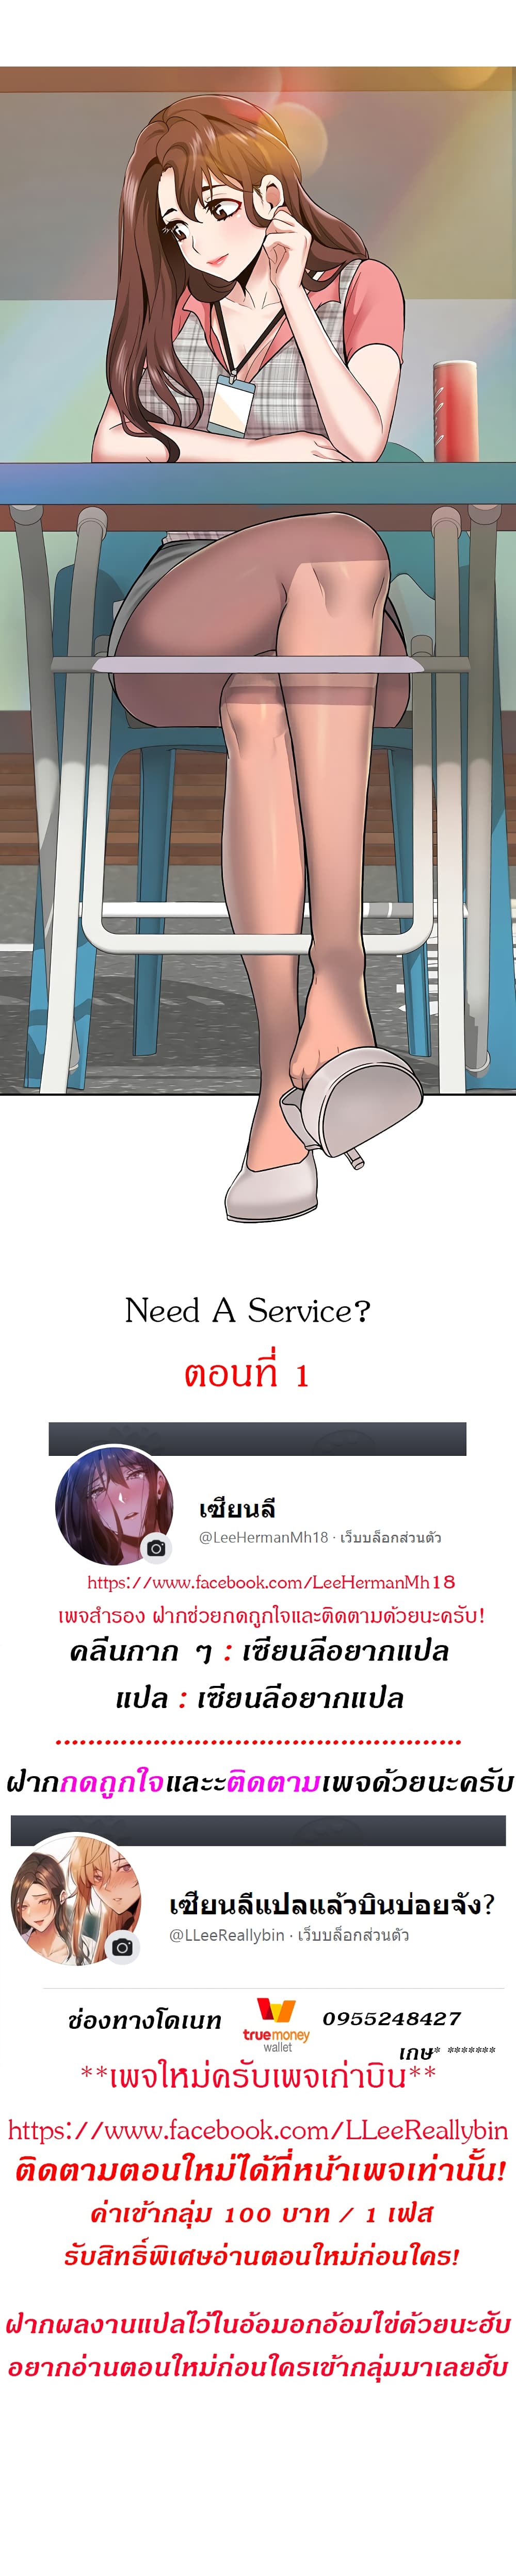 Need A Service? 1-1